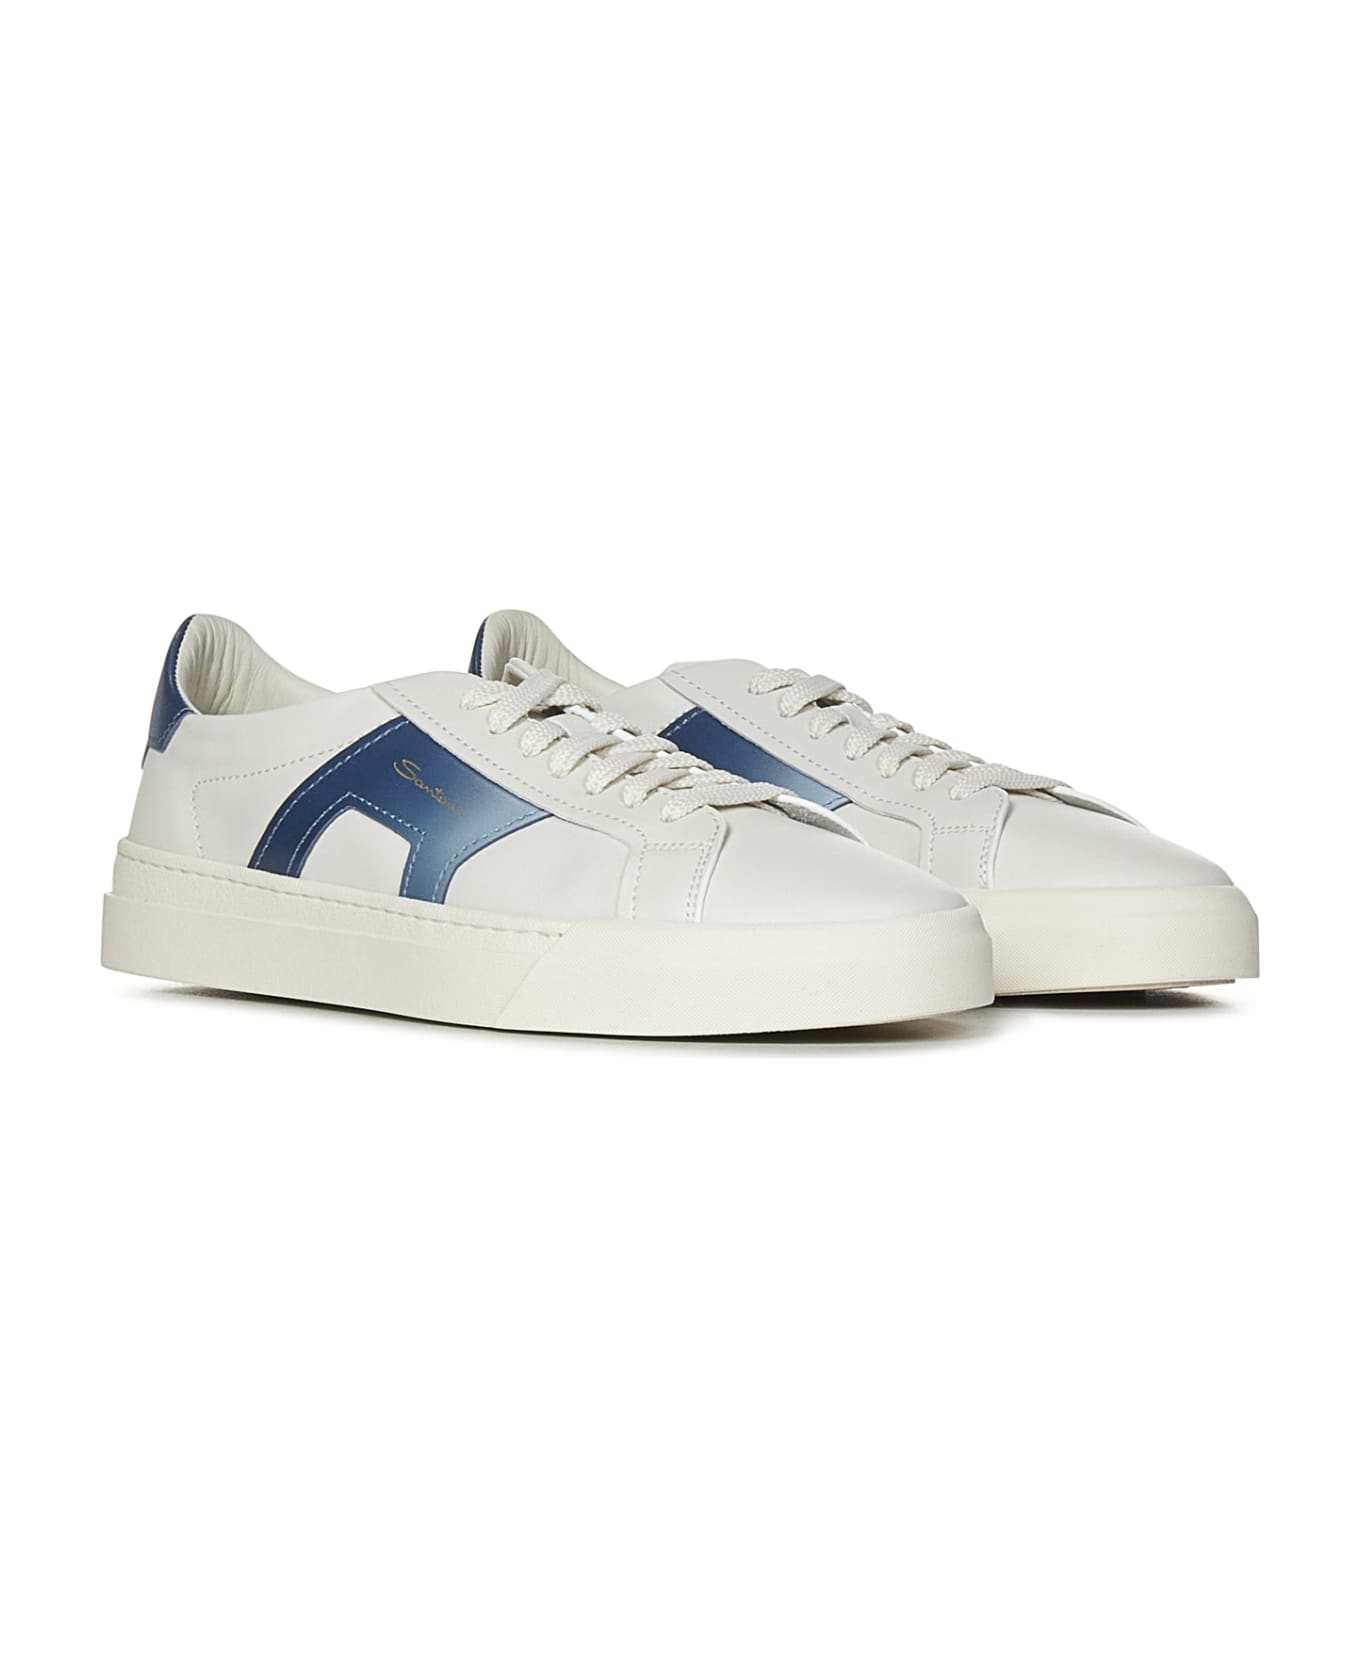 Santoni Double Buckle Sneakers - WHITE/BLUE